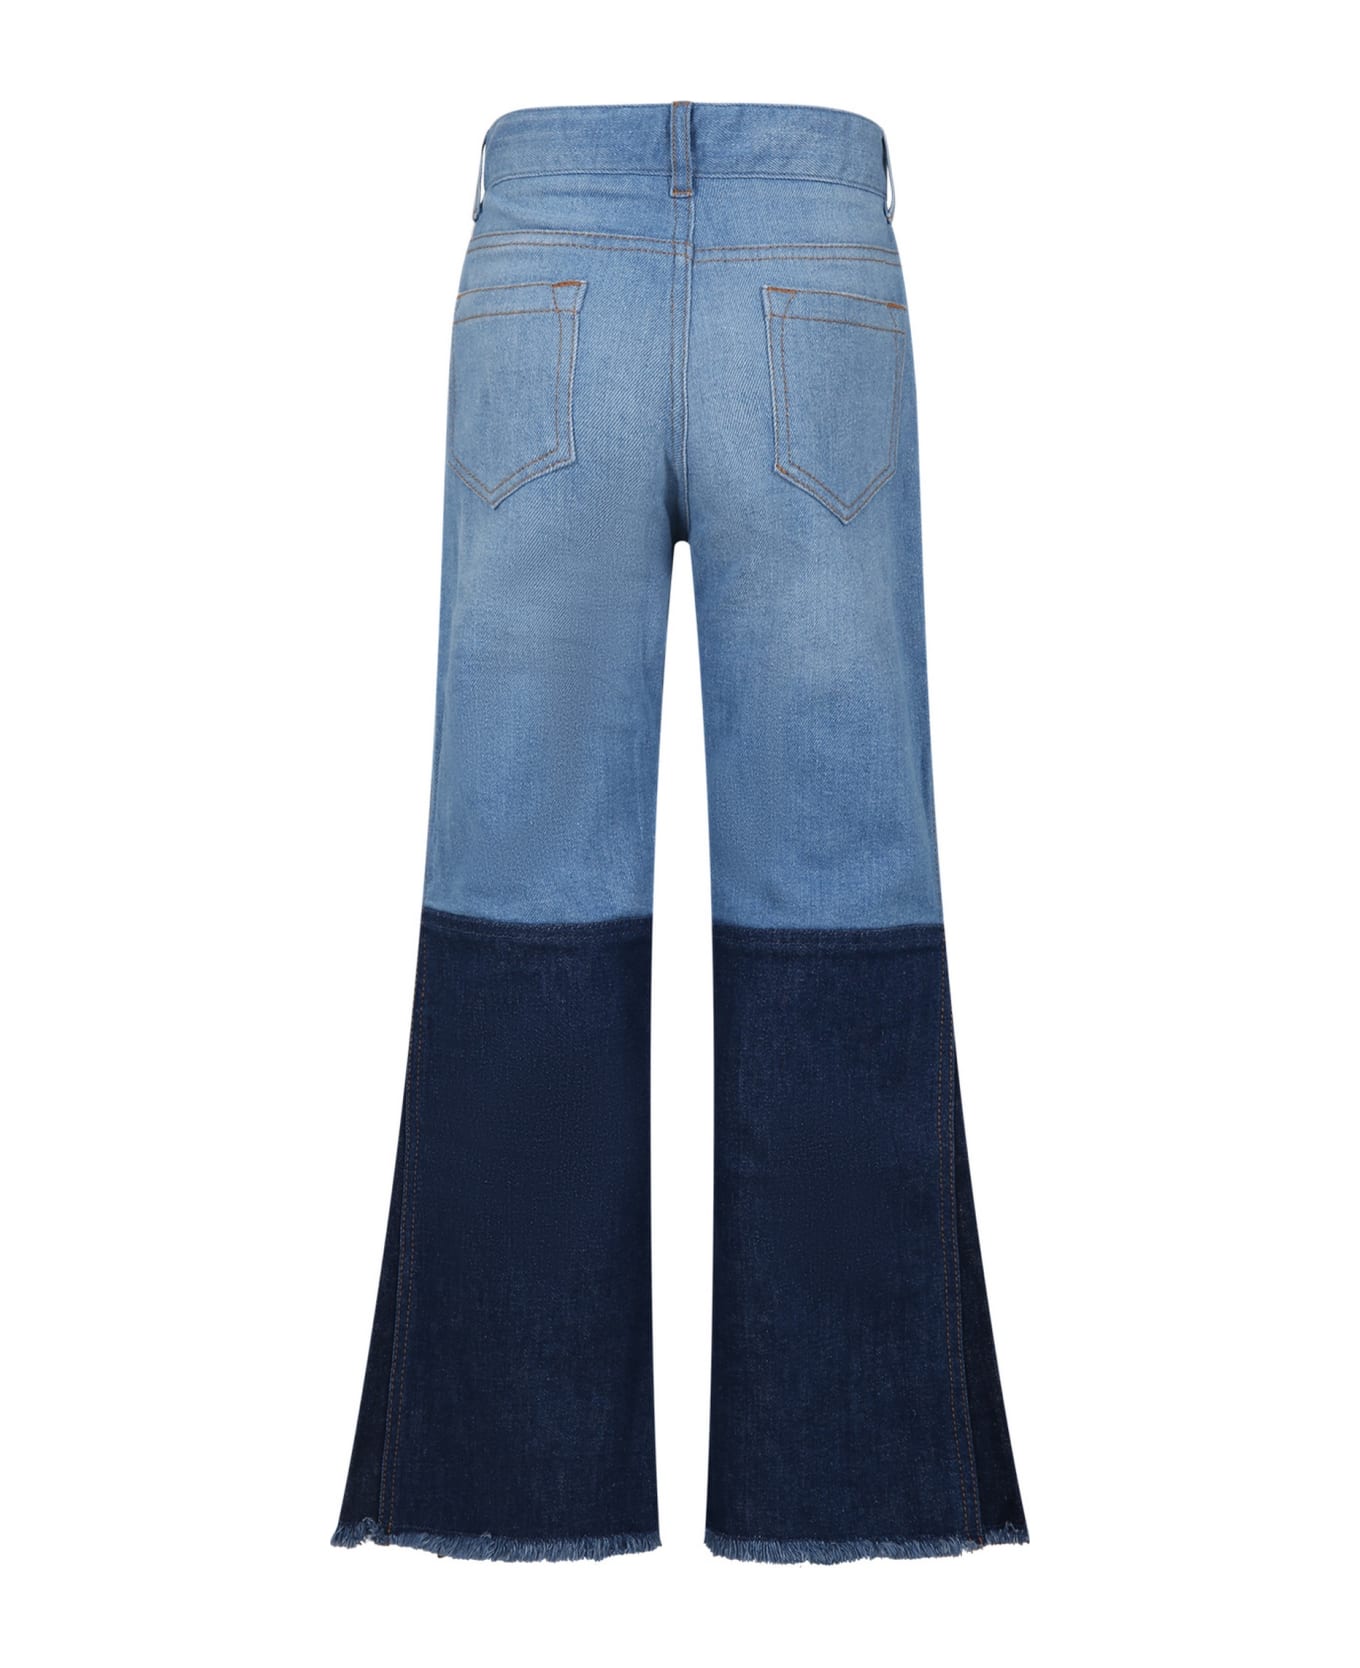 Chloé Light Blue Jeans For Girl With Logo - Denim ボトムス